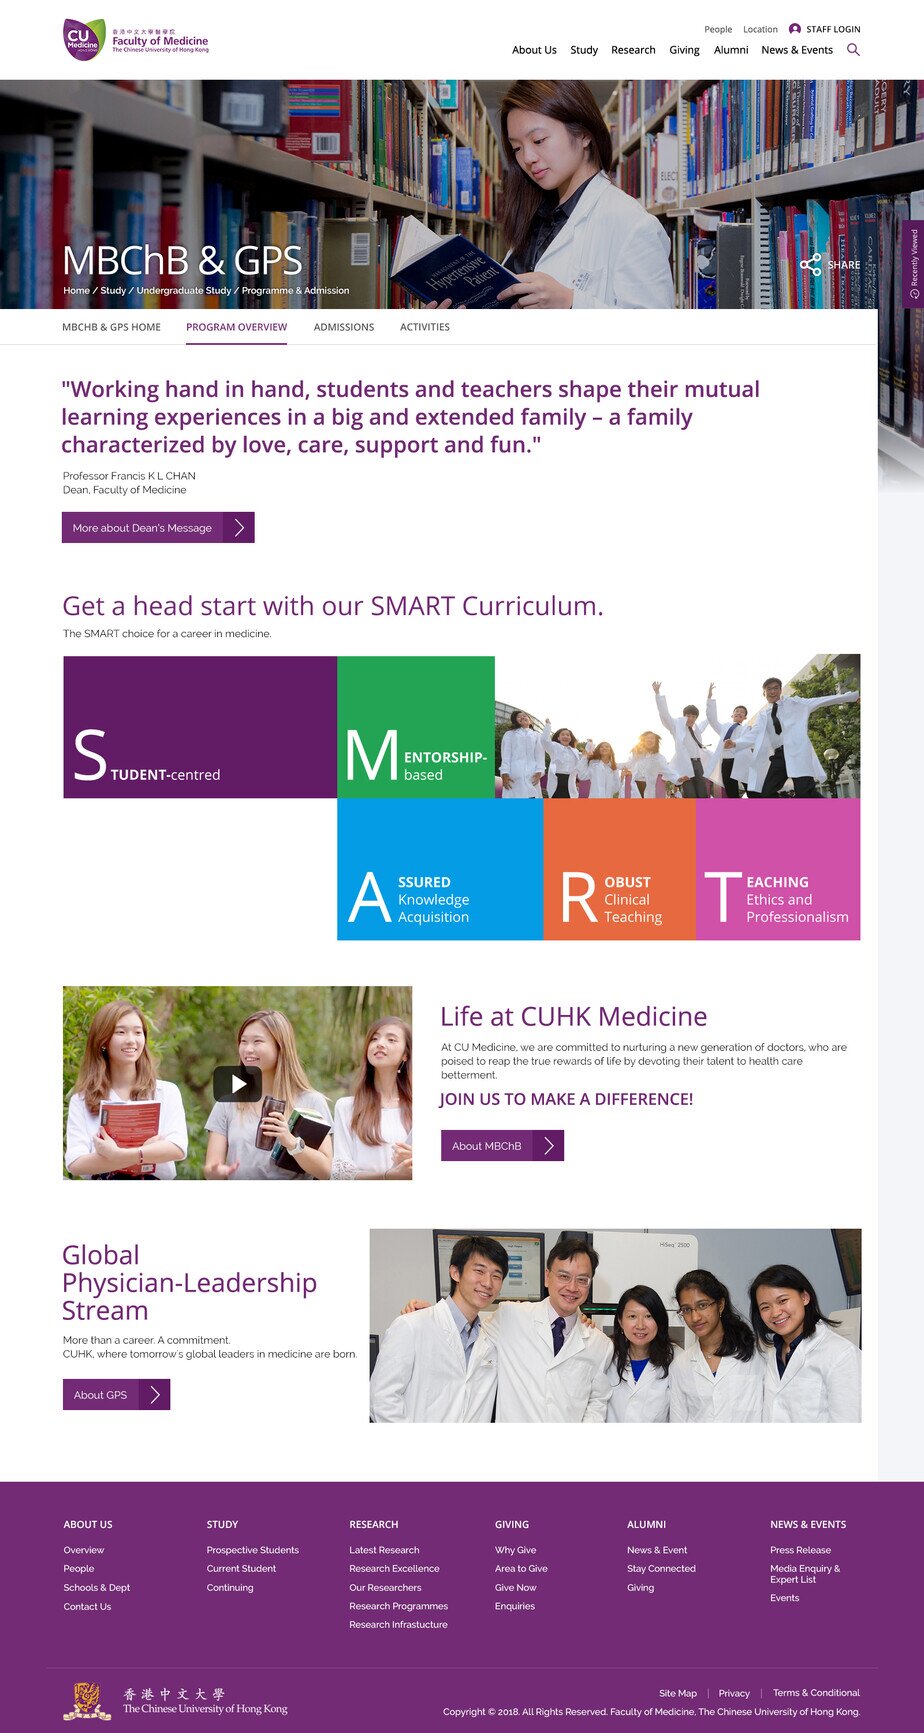 Chinese University of Hong Kong website screenshot for desktop version 4 of 5